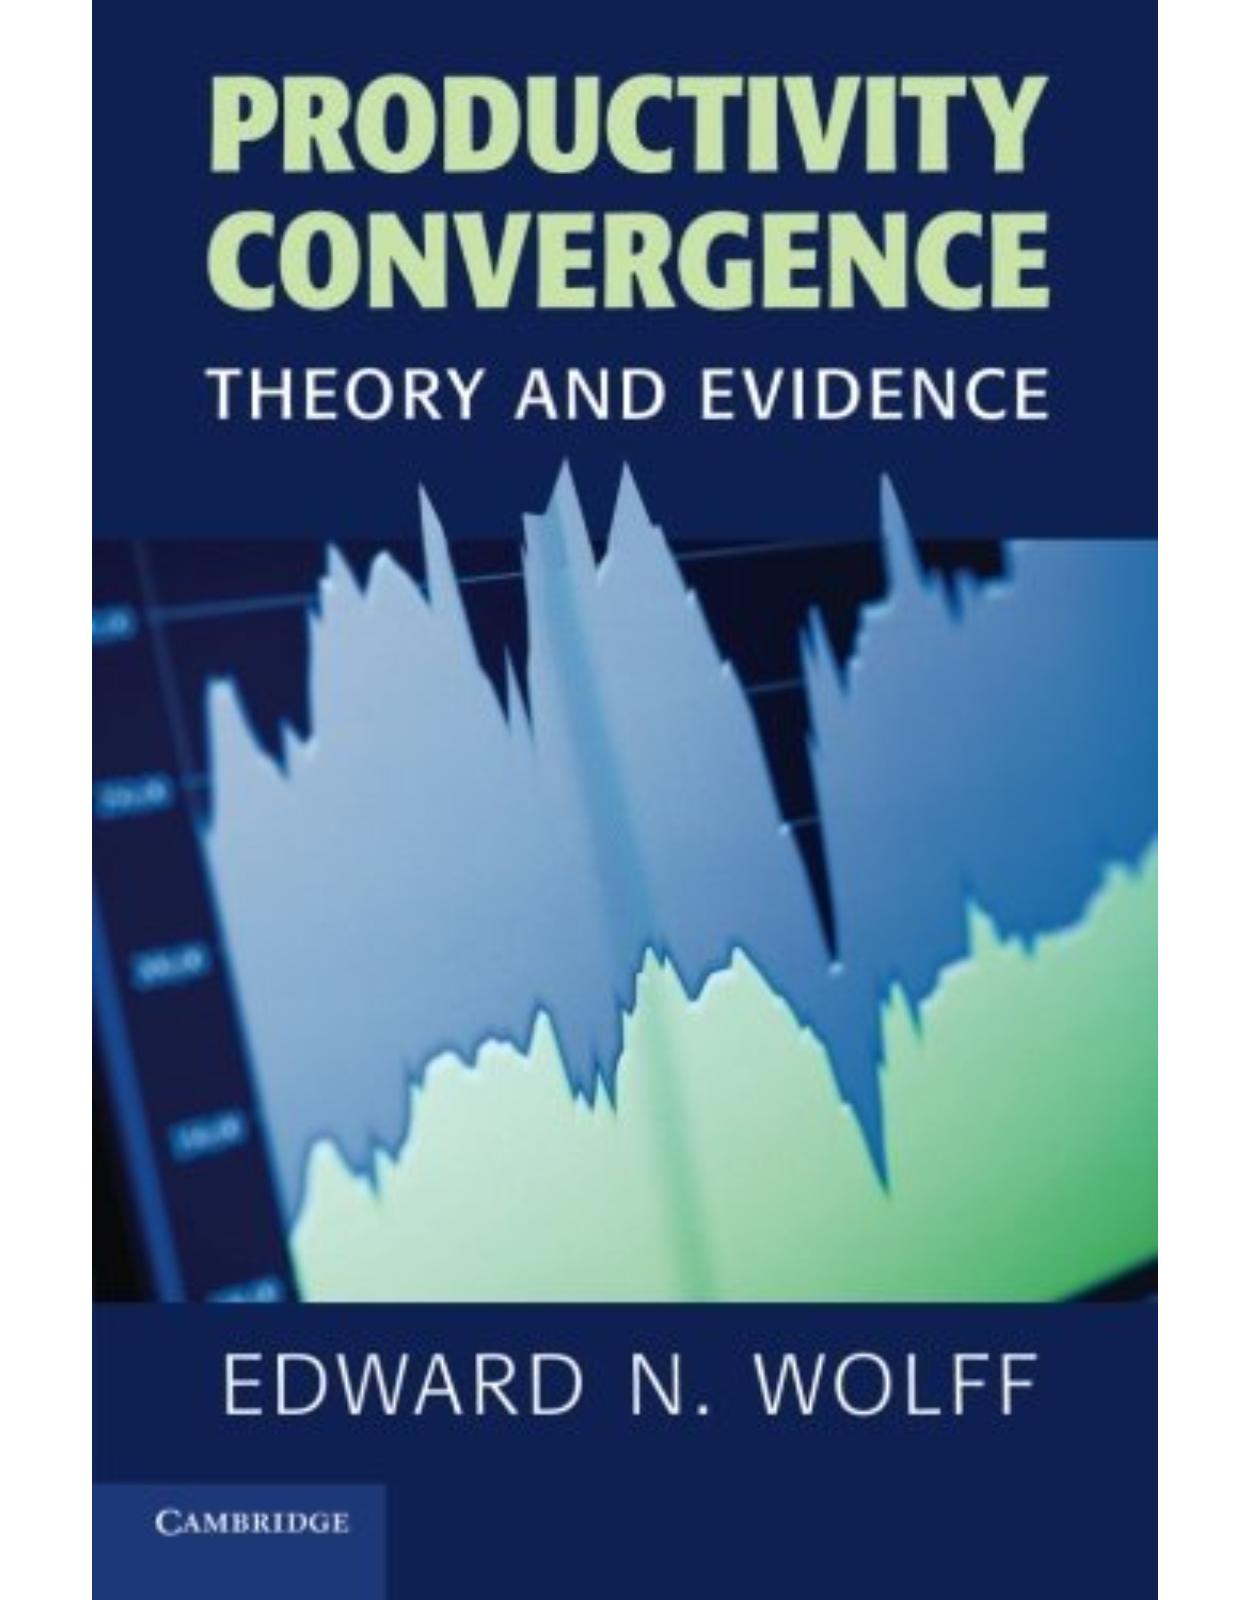 Productivity Convergence: Theory and Evidence (Cambridge Surveys of Economic Literature)